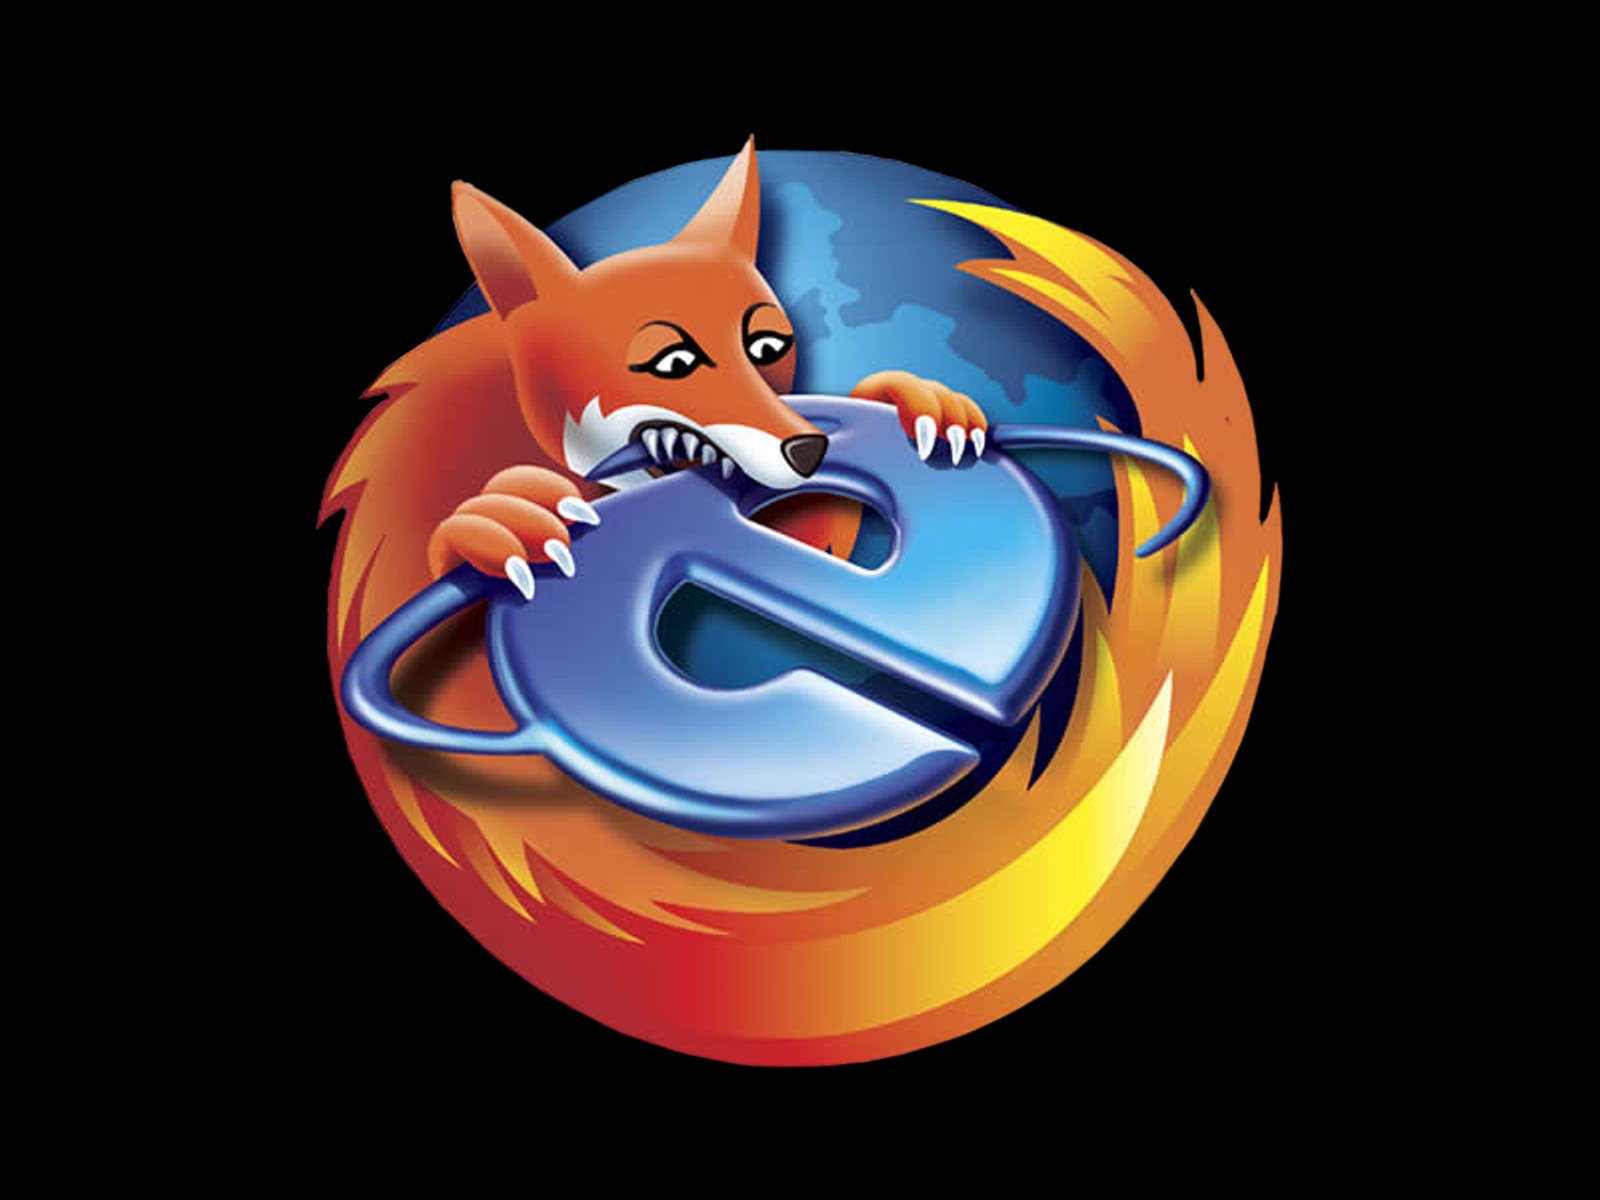 Firefox HD Wallpaper Mozilla Background In